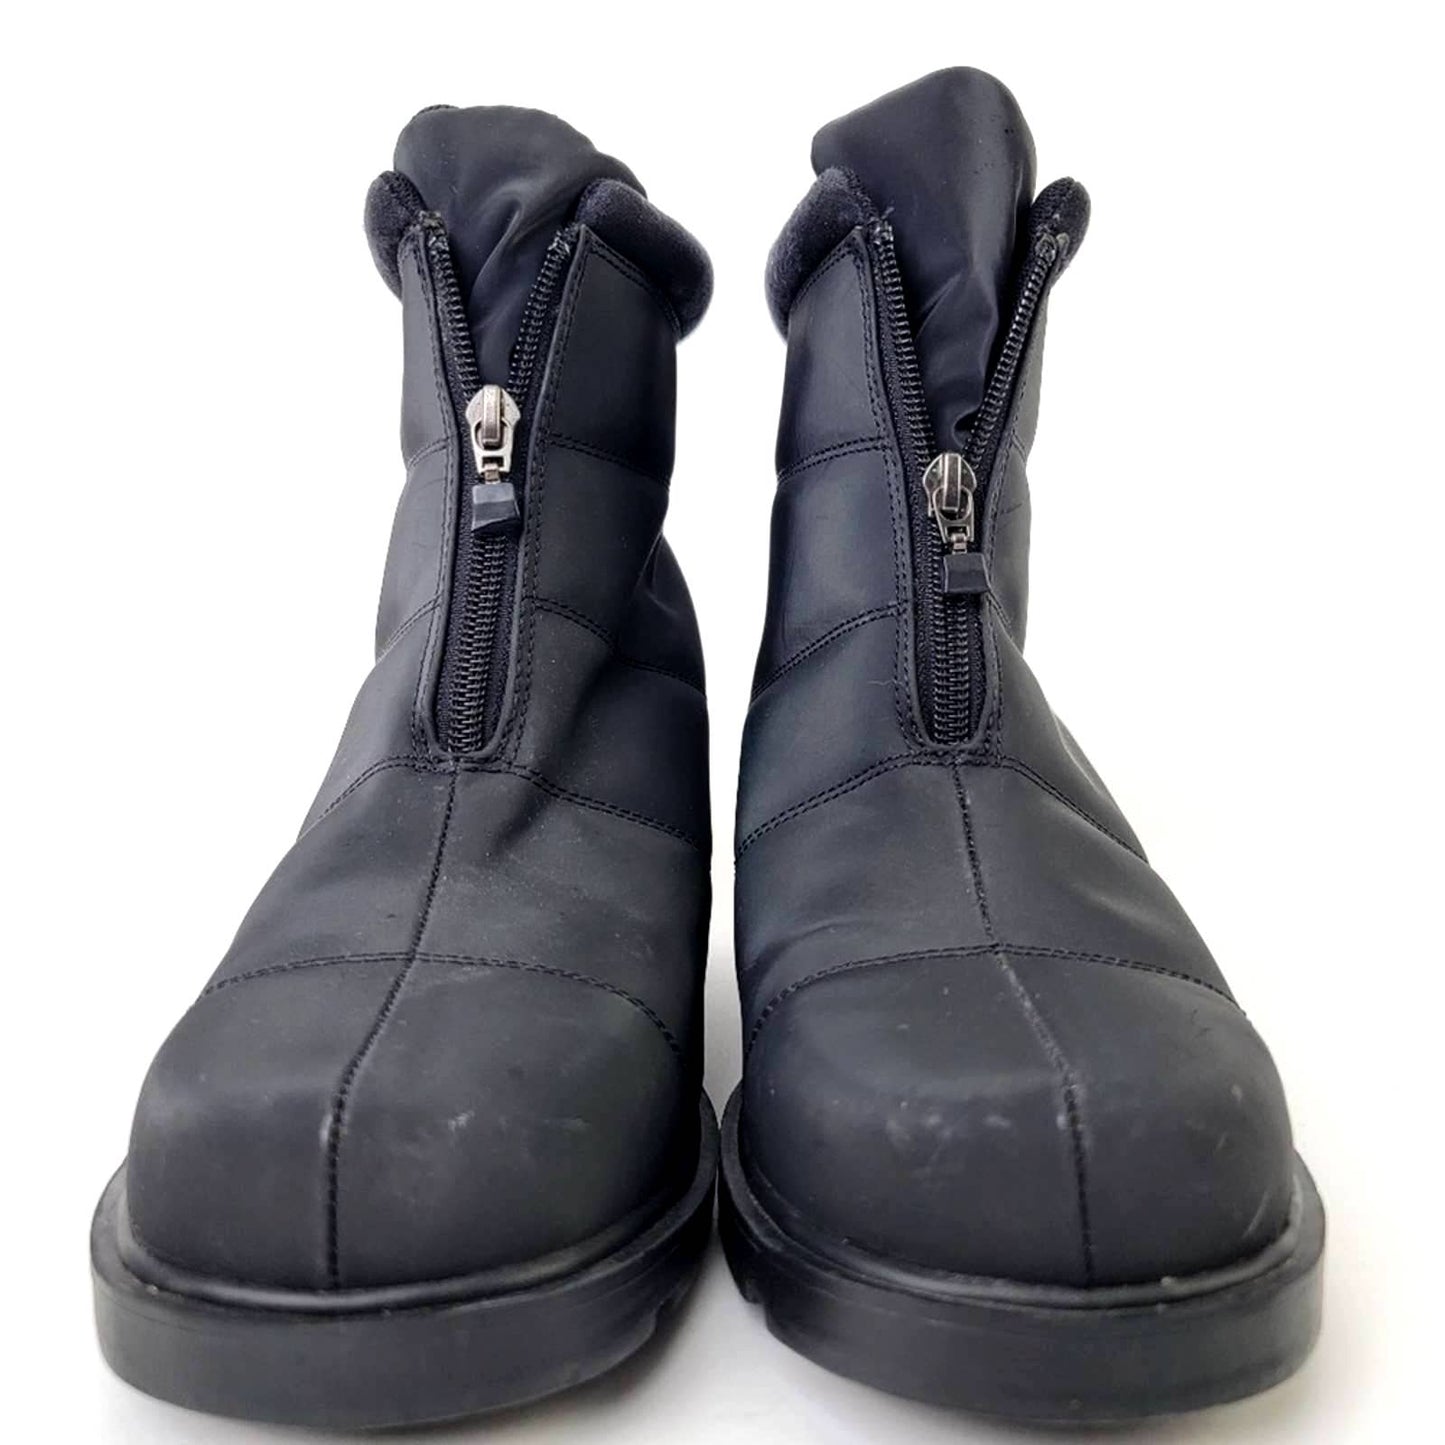 London Fog Chunky Black Zip Up Casey Mid Snow Boots - 11